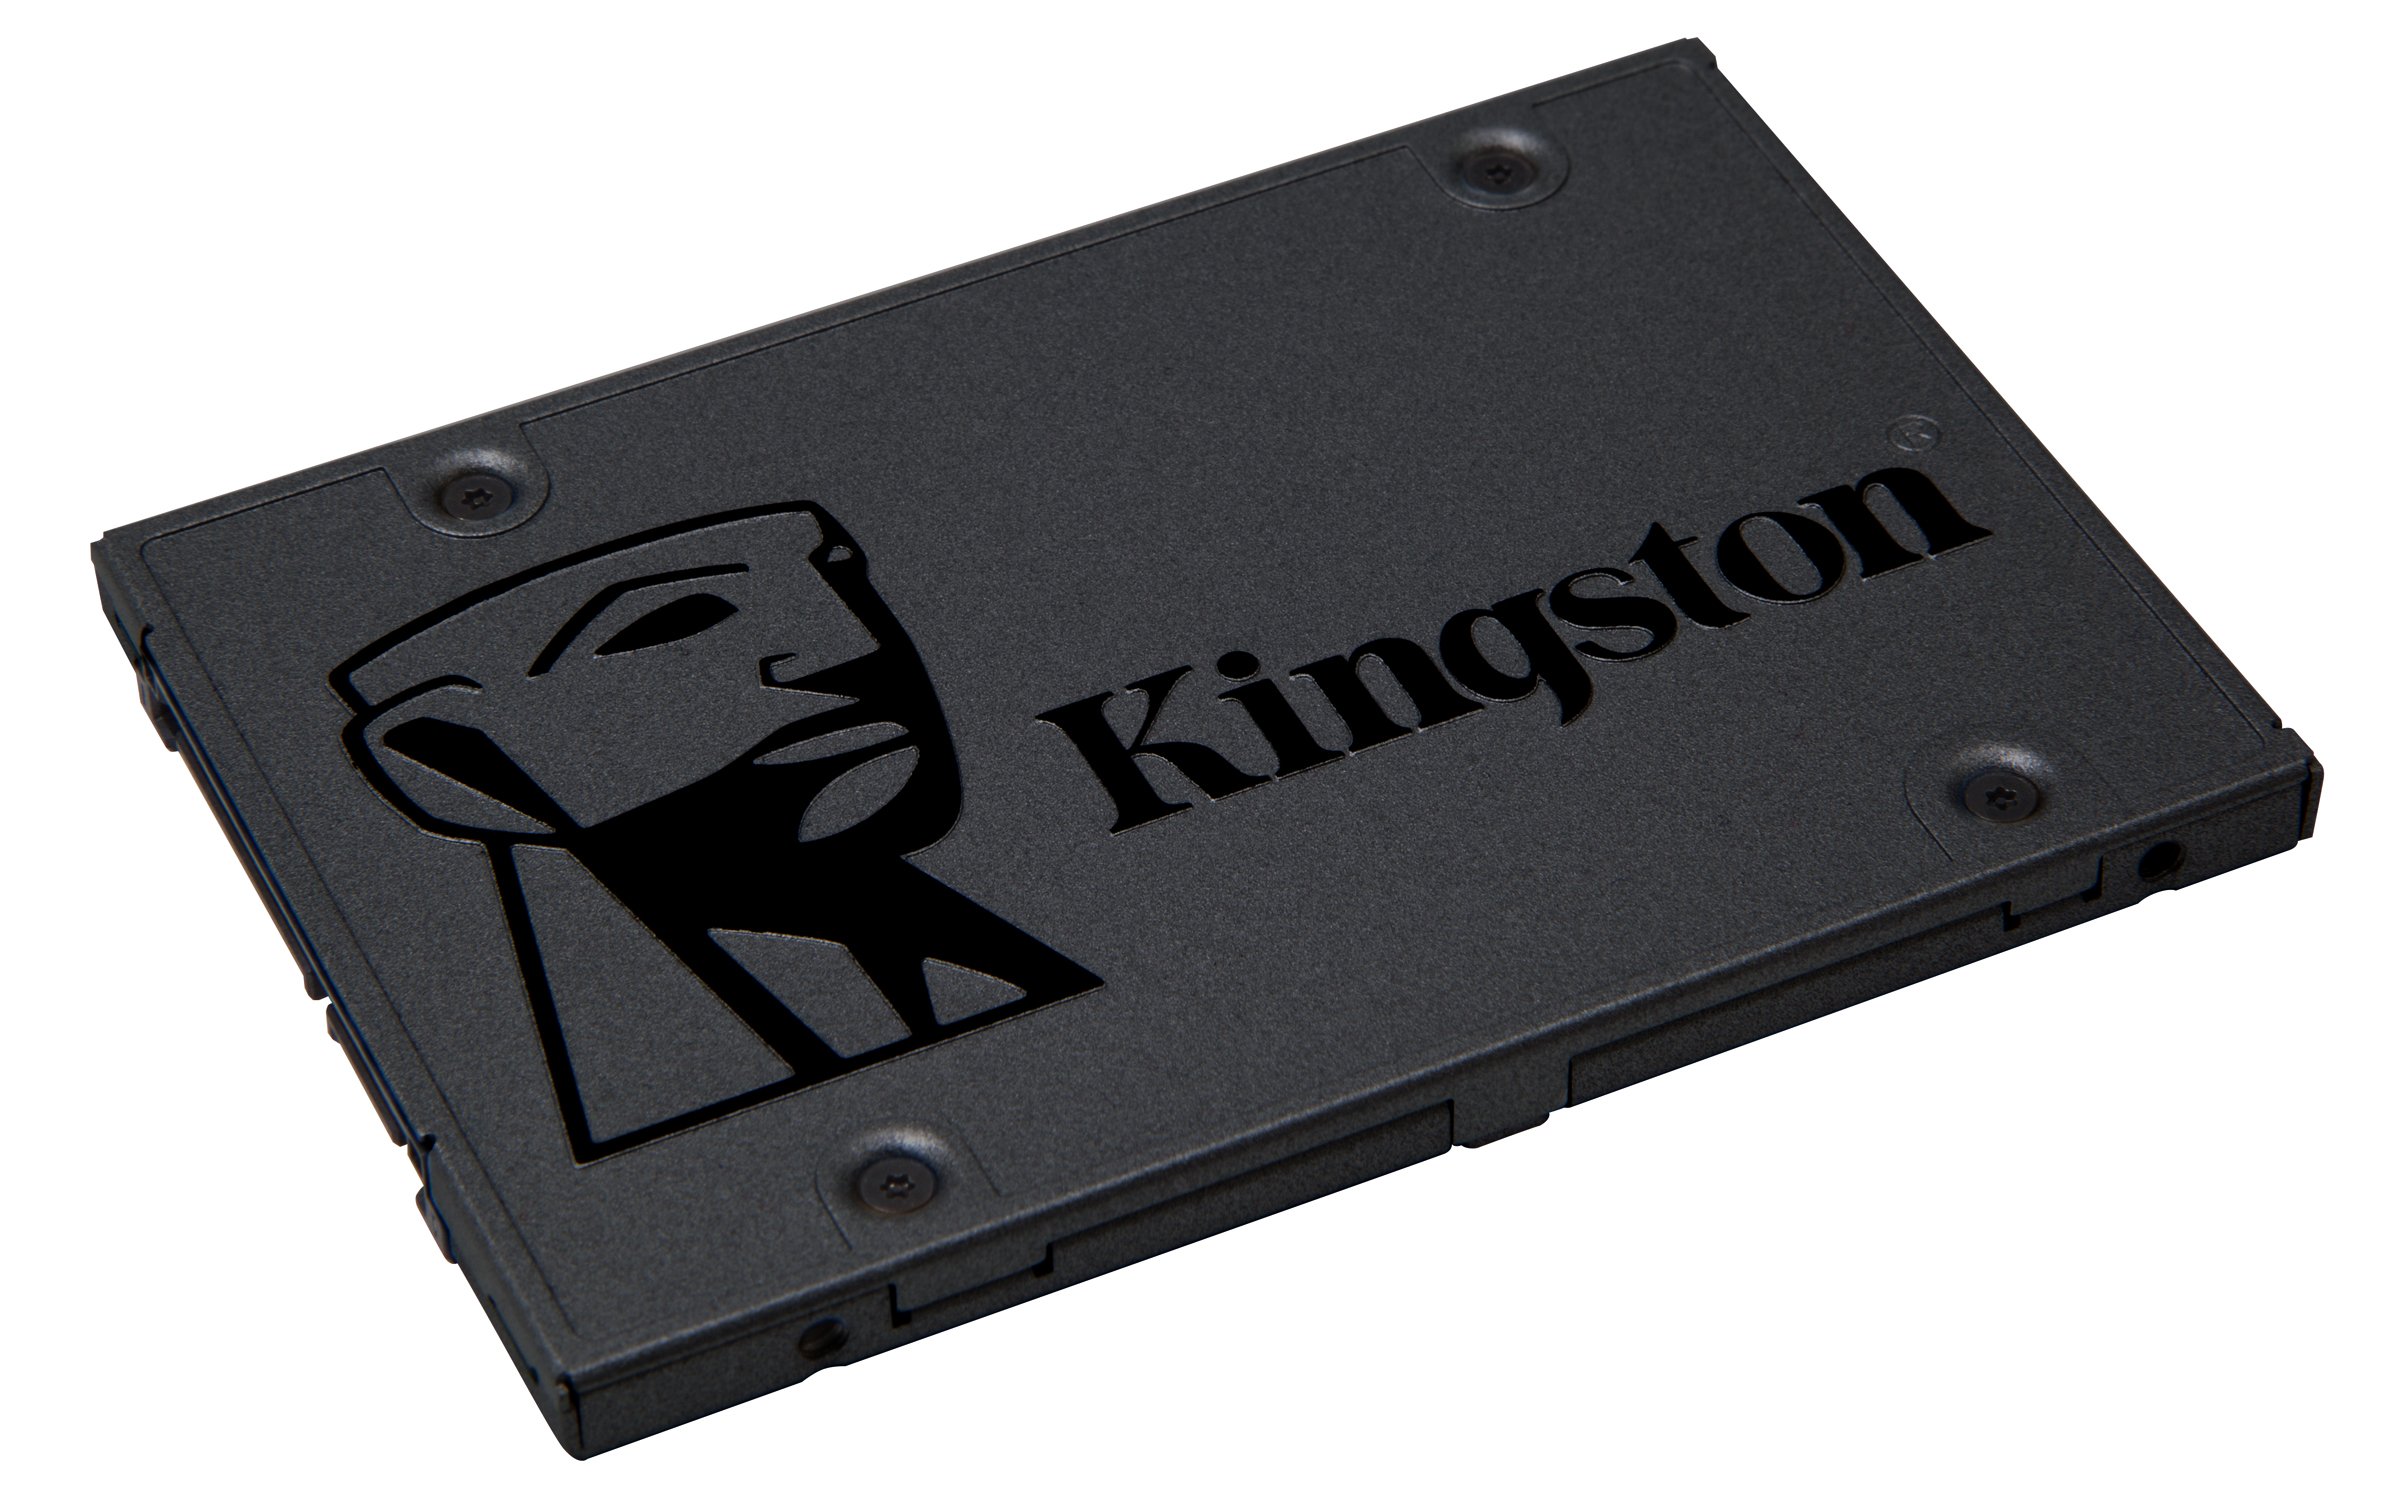 SSD ESTADO SOLIDO KINGSTON INT 240 GB A400 SATA 2.5 SSD 7MM, SA400S37240G - SA400S37240G-GO